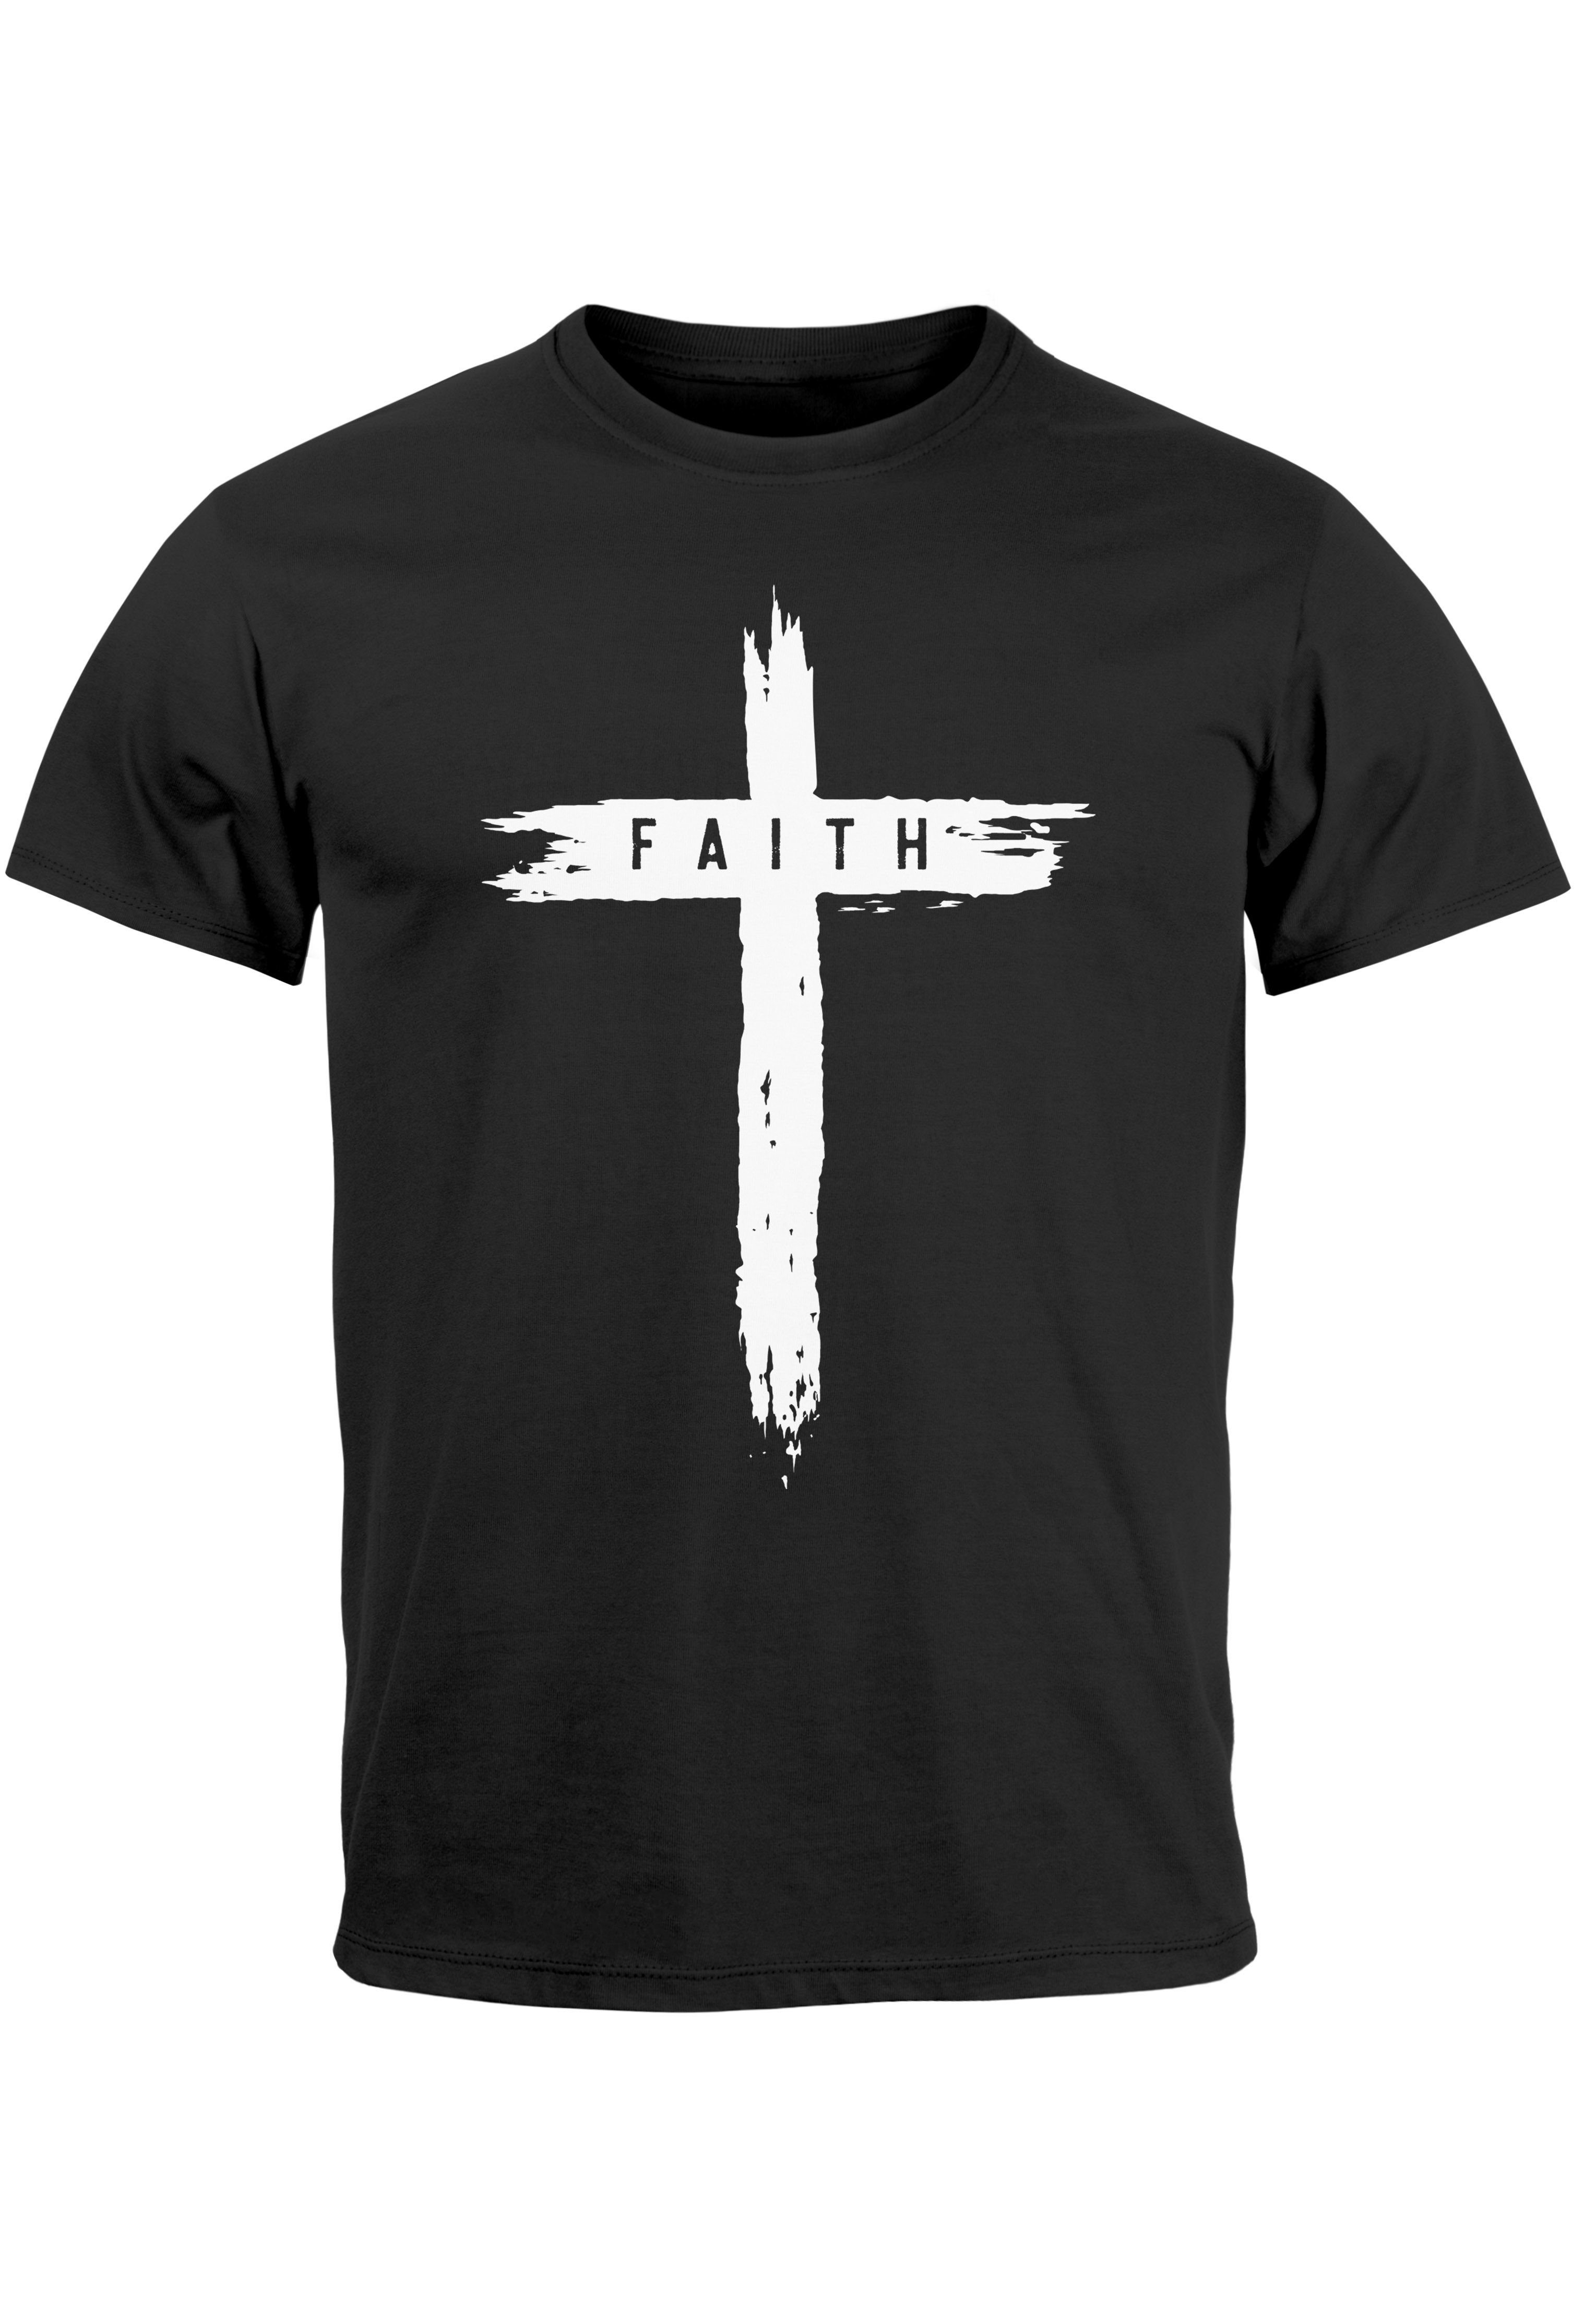 Neverless Print-Shirt Herren T-Shirt Printshirt Aufdruck Kreuz Cross Faith Glaube Trend-Moti mit Print